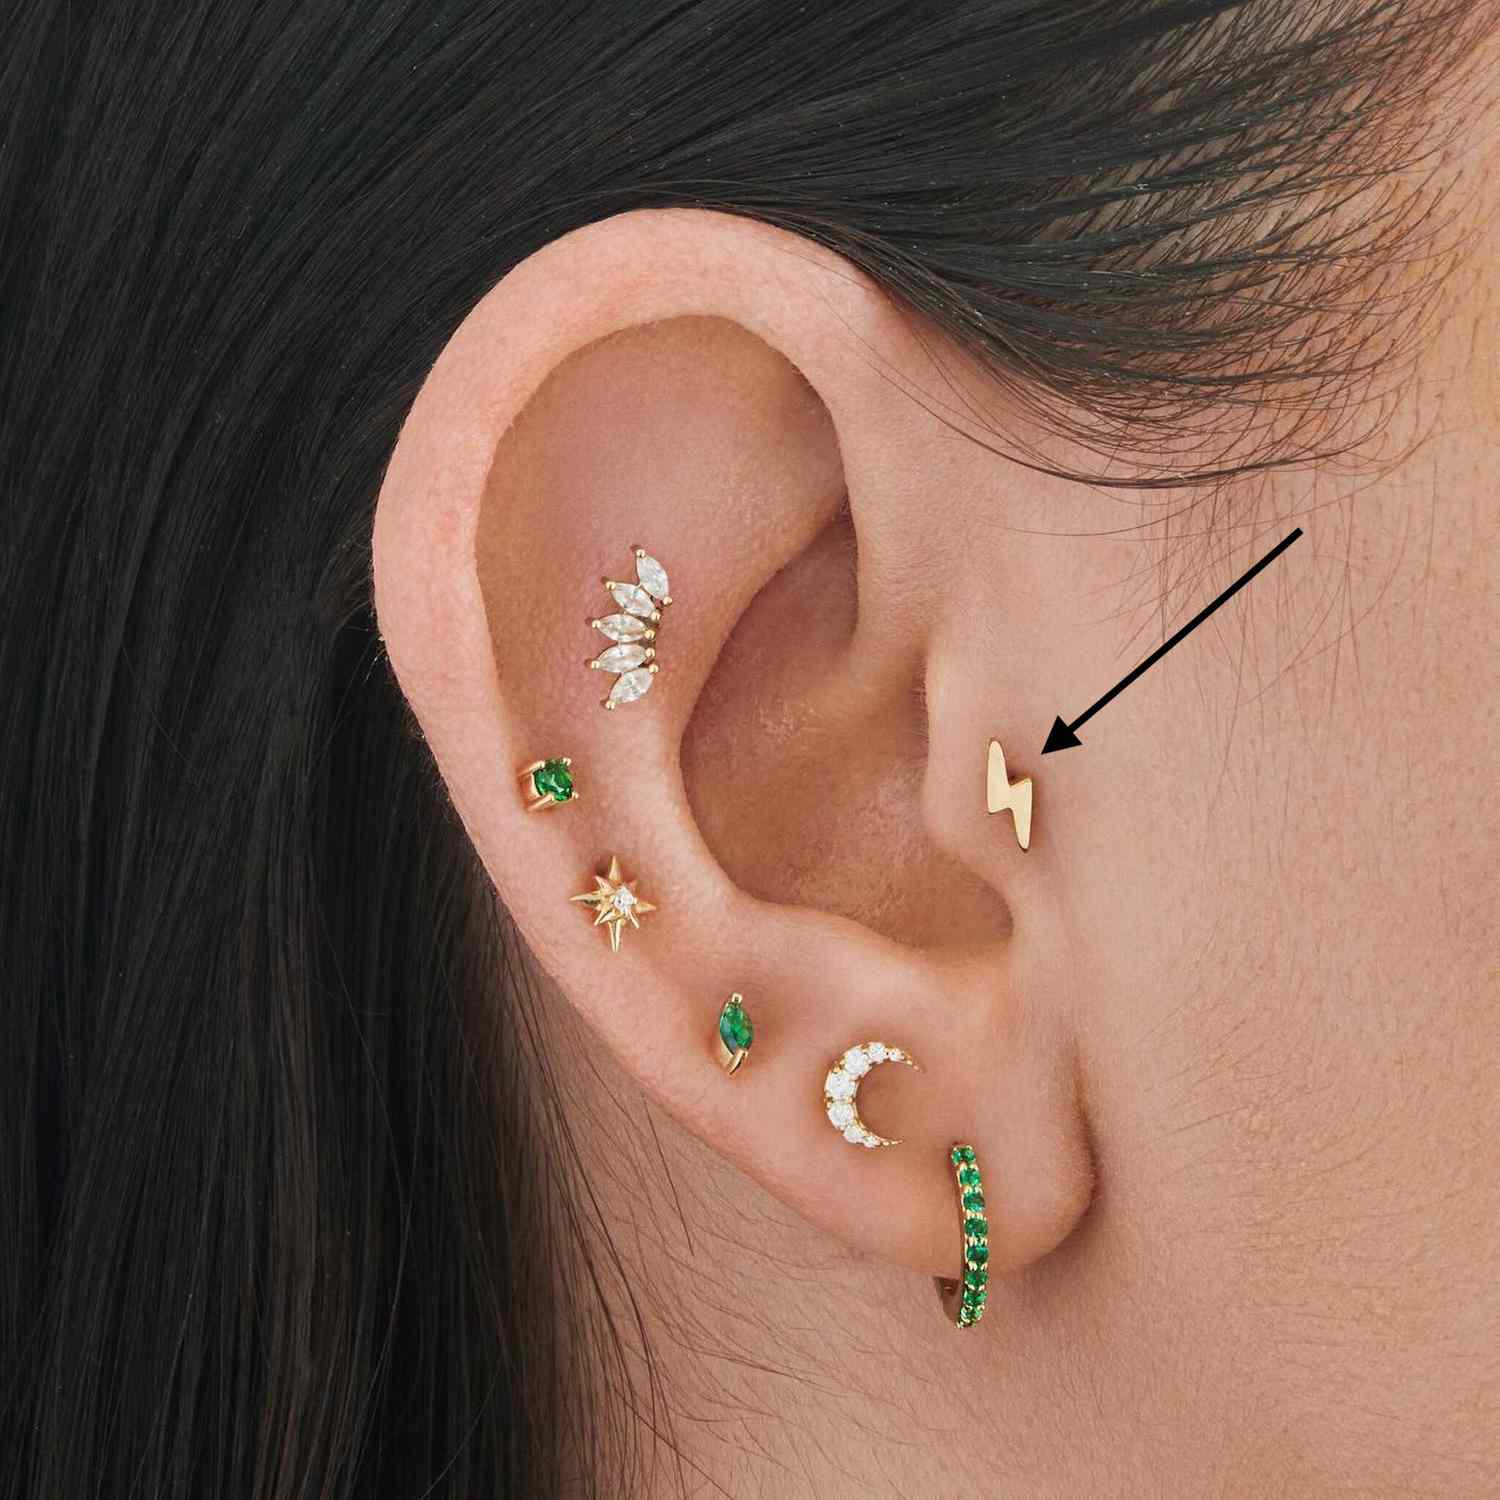 orelha feminina com piercing tipo raio